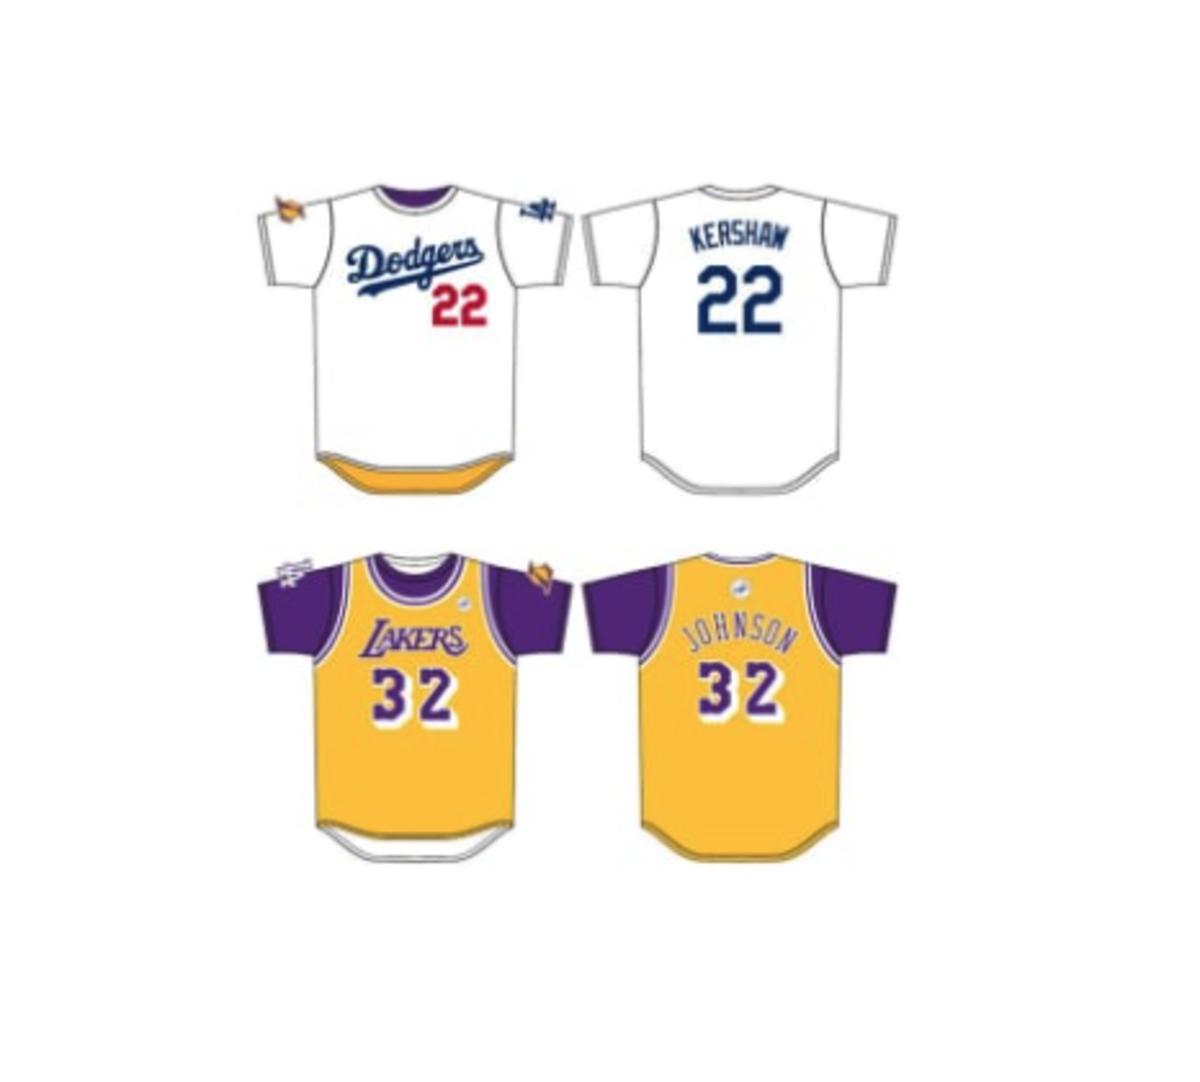 Lakers: Dodger Hosting Clayton Kershaw-Magic Johnson Jersey Promo Tonight -  All Lakers